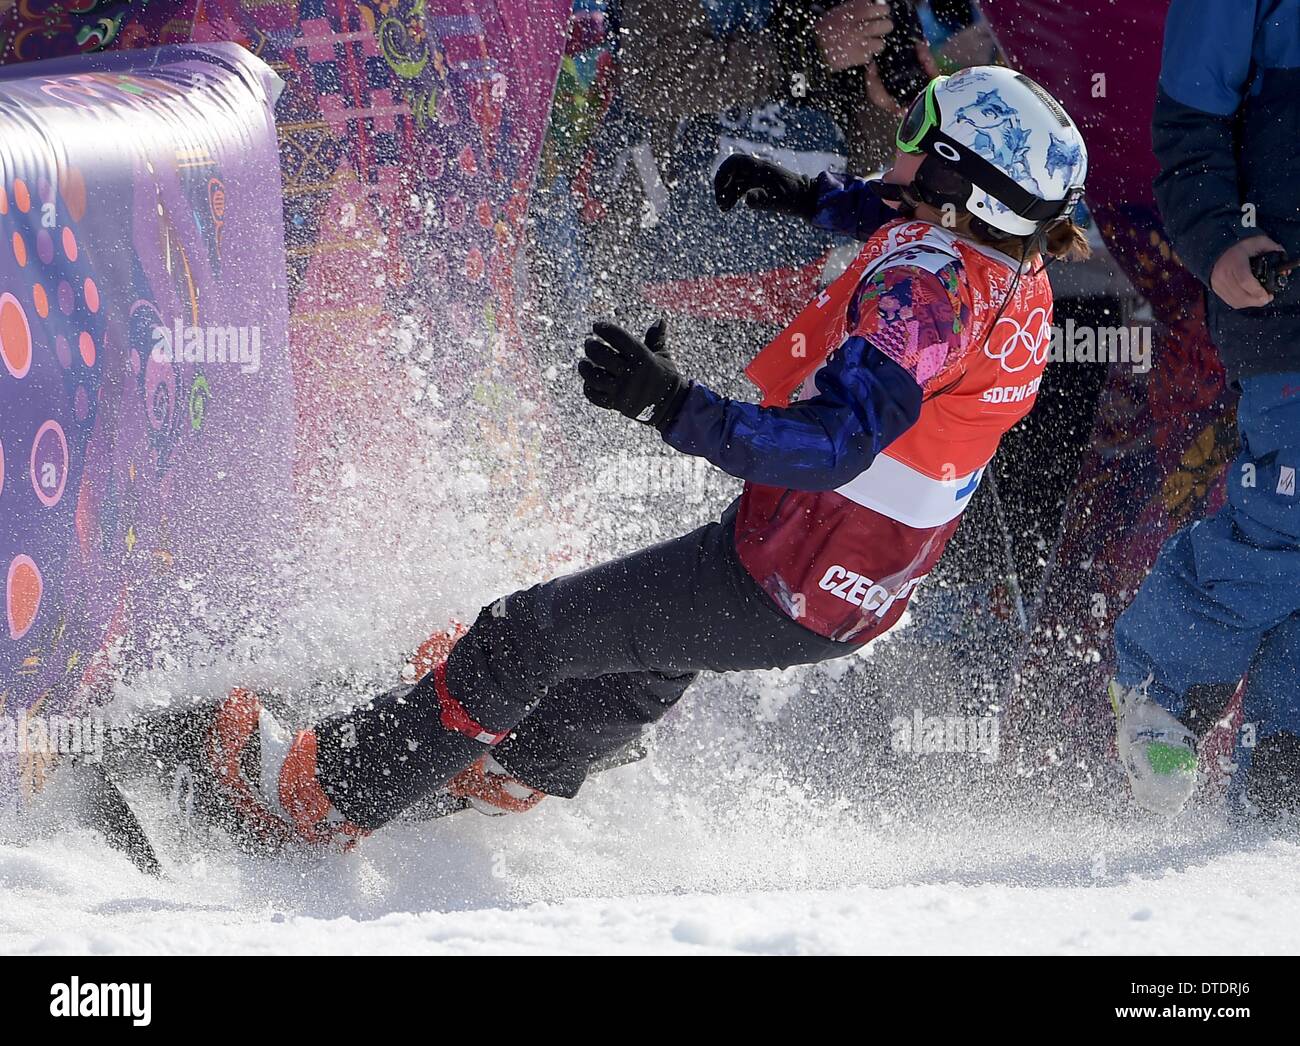 Eva Samkova (CZE) feiert sie stürzt nach dem Gewinn der Goldmedaille in den Ausgang. Womens Snowbboard Cross - Rosa Khutor Extreme Park - Sotschi - Russland - 16.02.2014 Stockfoto